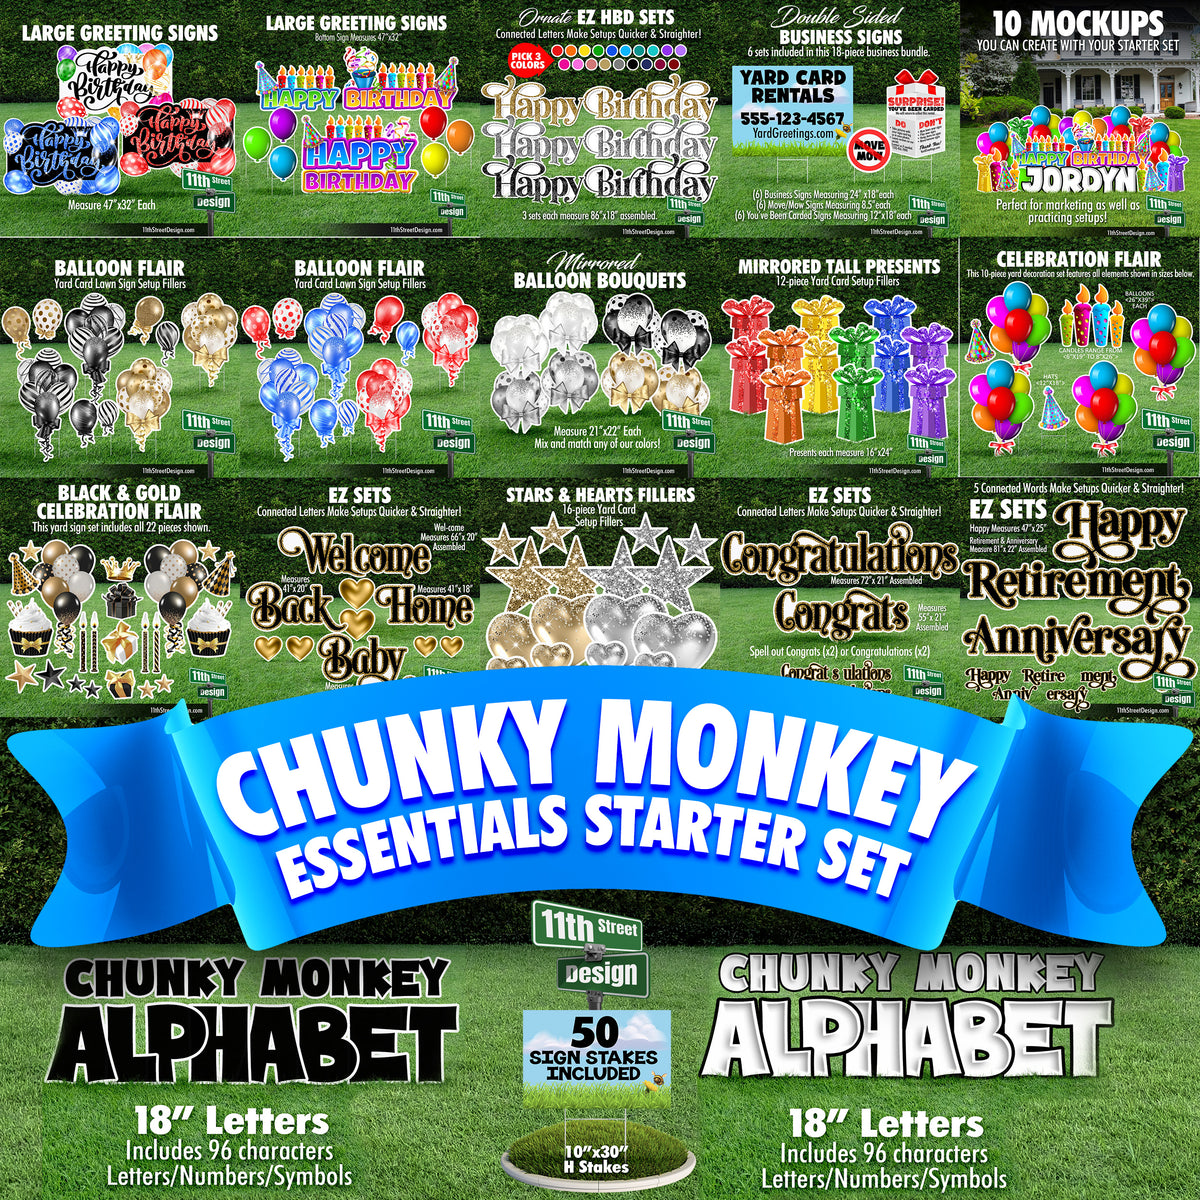 Chunky Monkey Starter Set - The Essentials